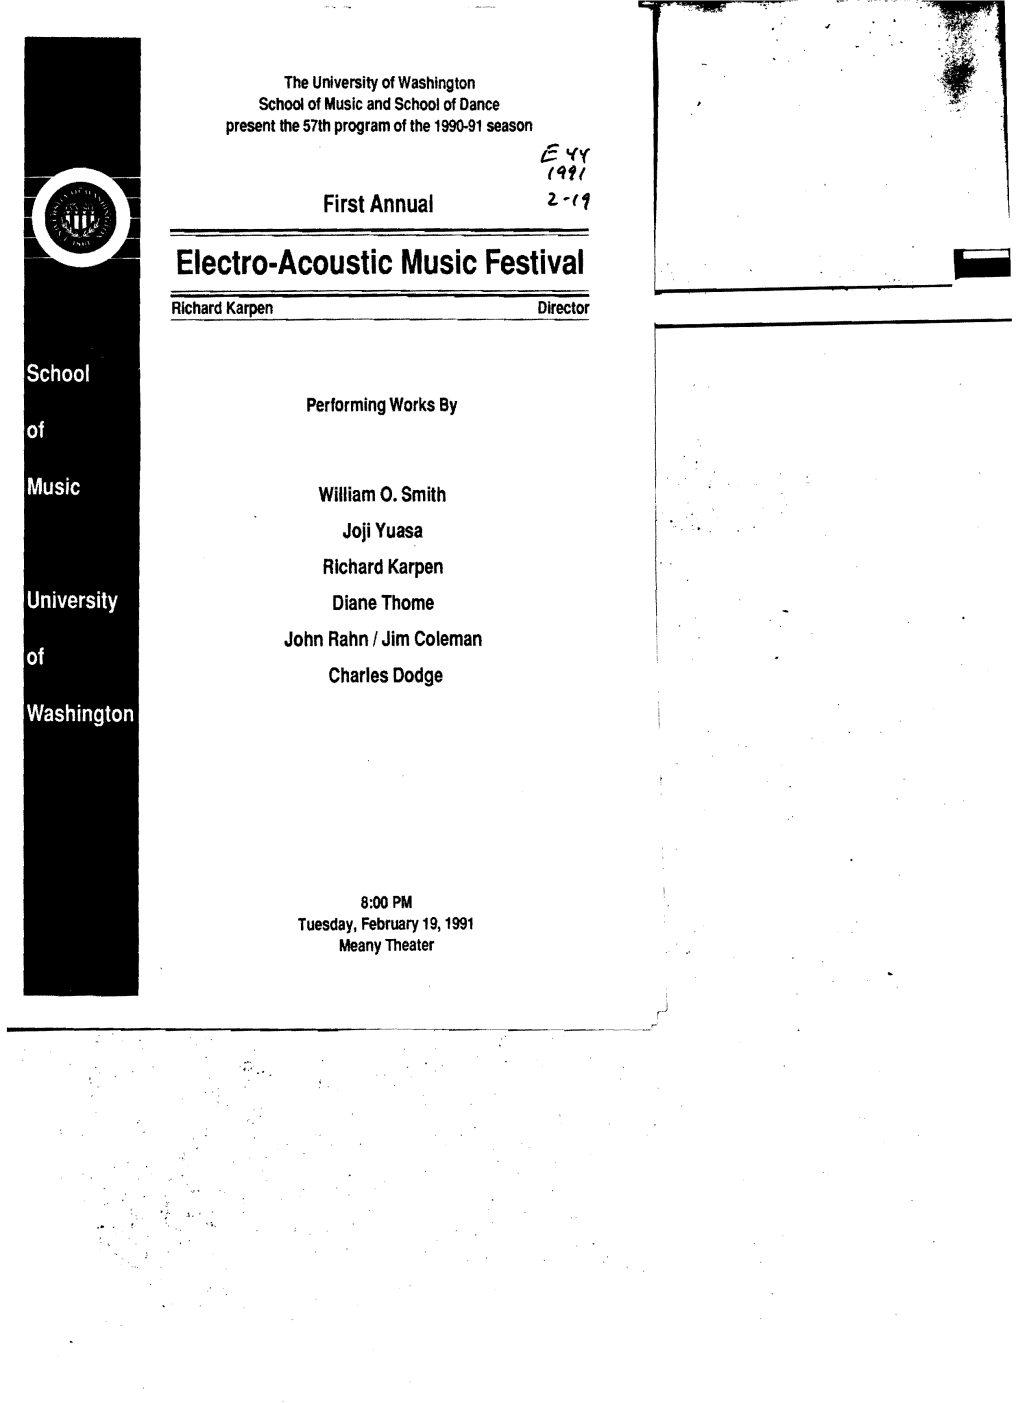 Electro-Acoustic Music Festival L Iii Richard Karpen Director